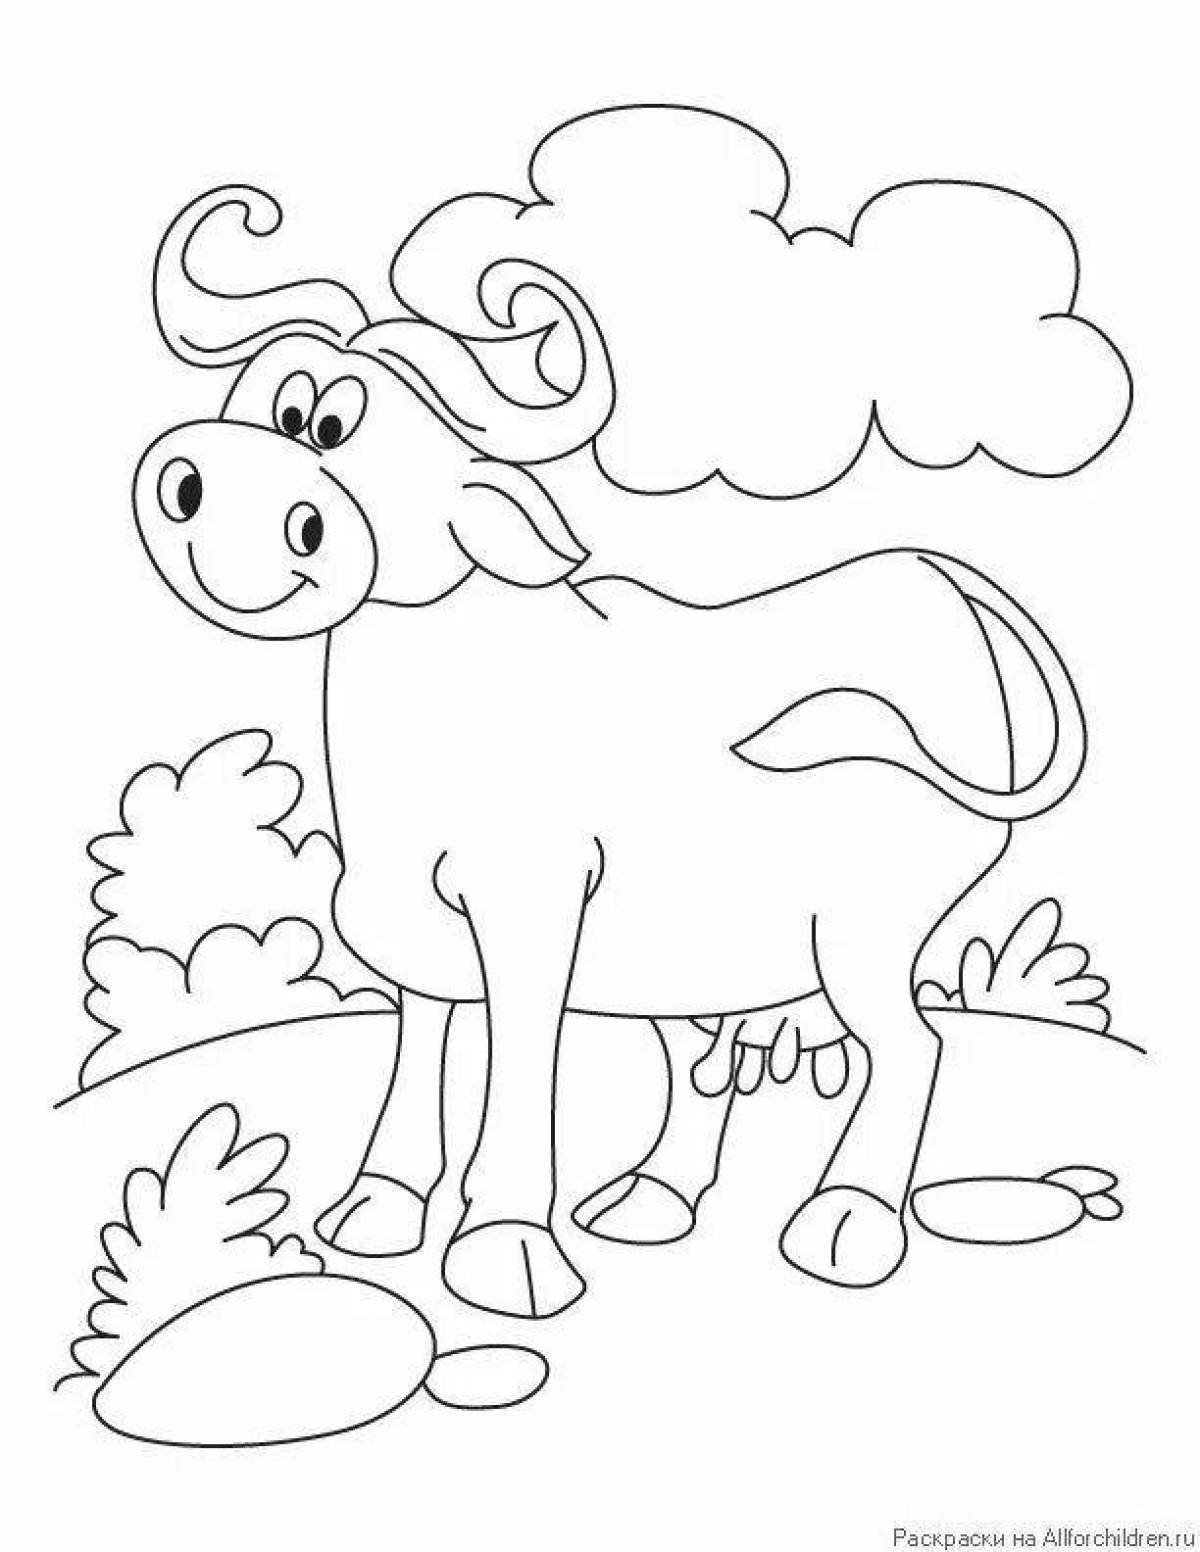 Vibrant buffalo coloring page